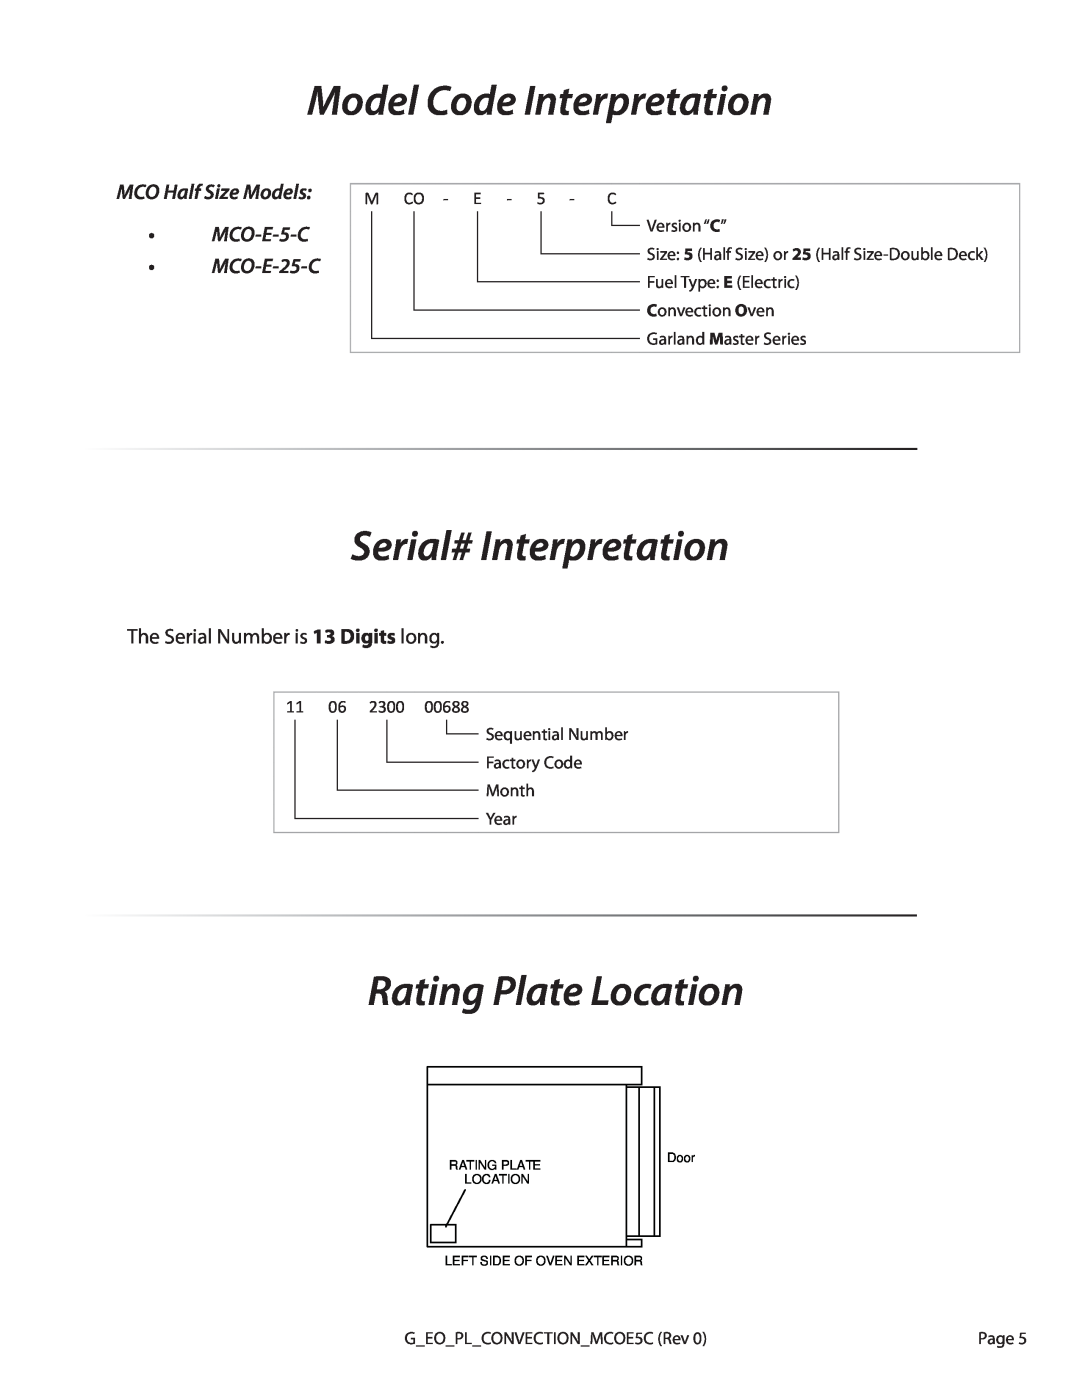 Garland MCO-E-25-C manual Model Code Interpretation, Serial# Interpretation, Rating Plate Location, M CO - E - 5 - C, Door 